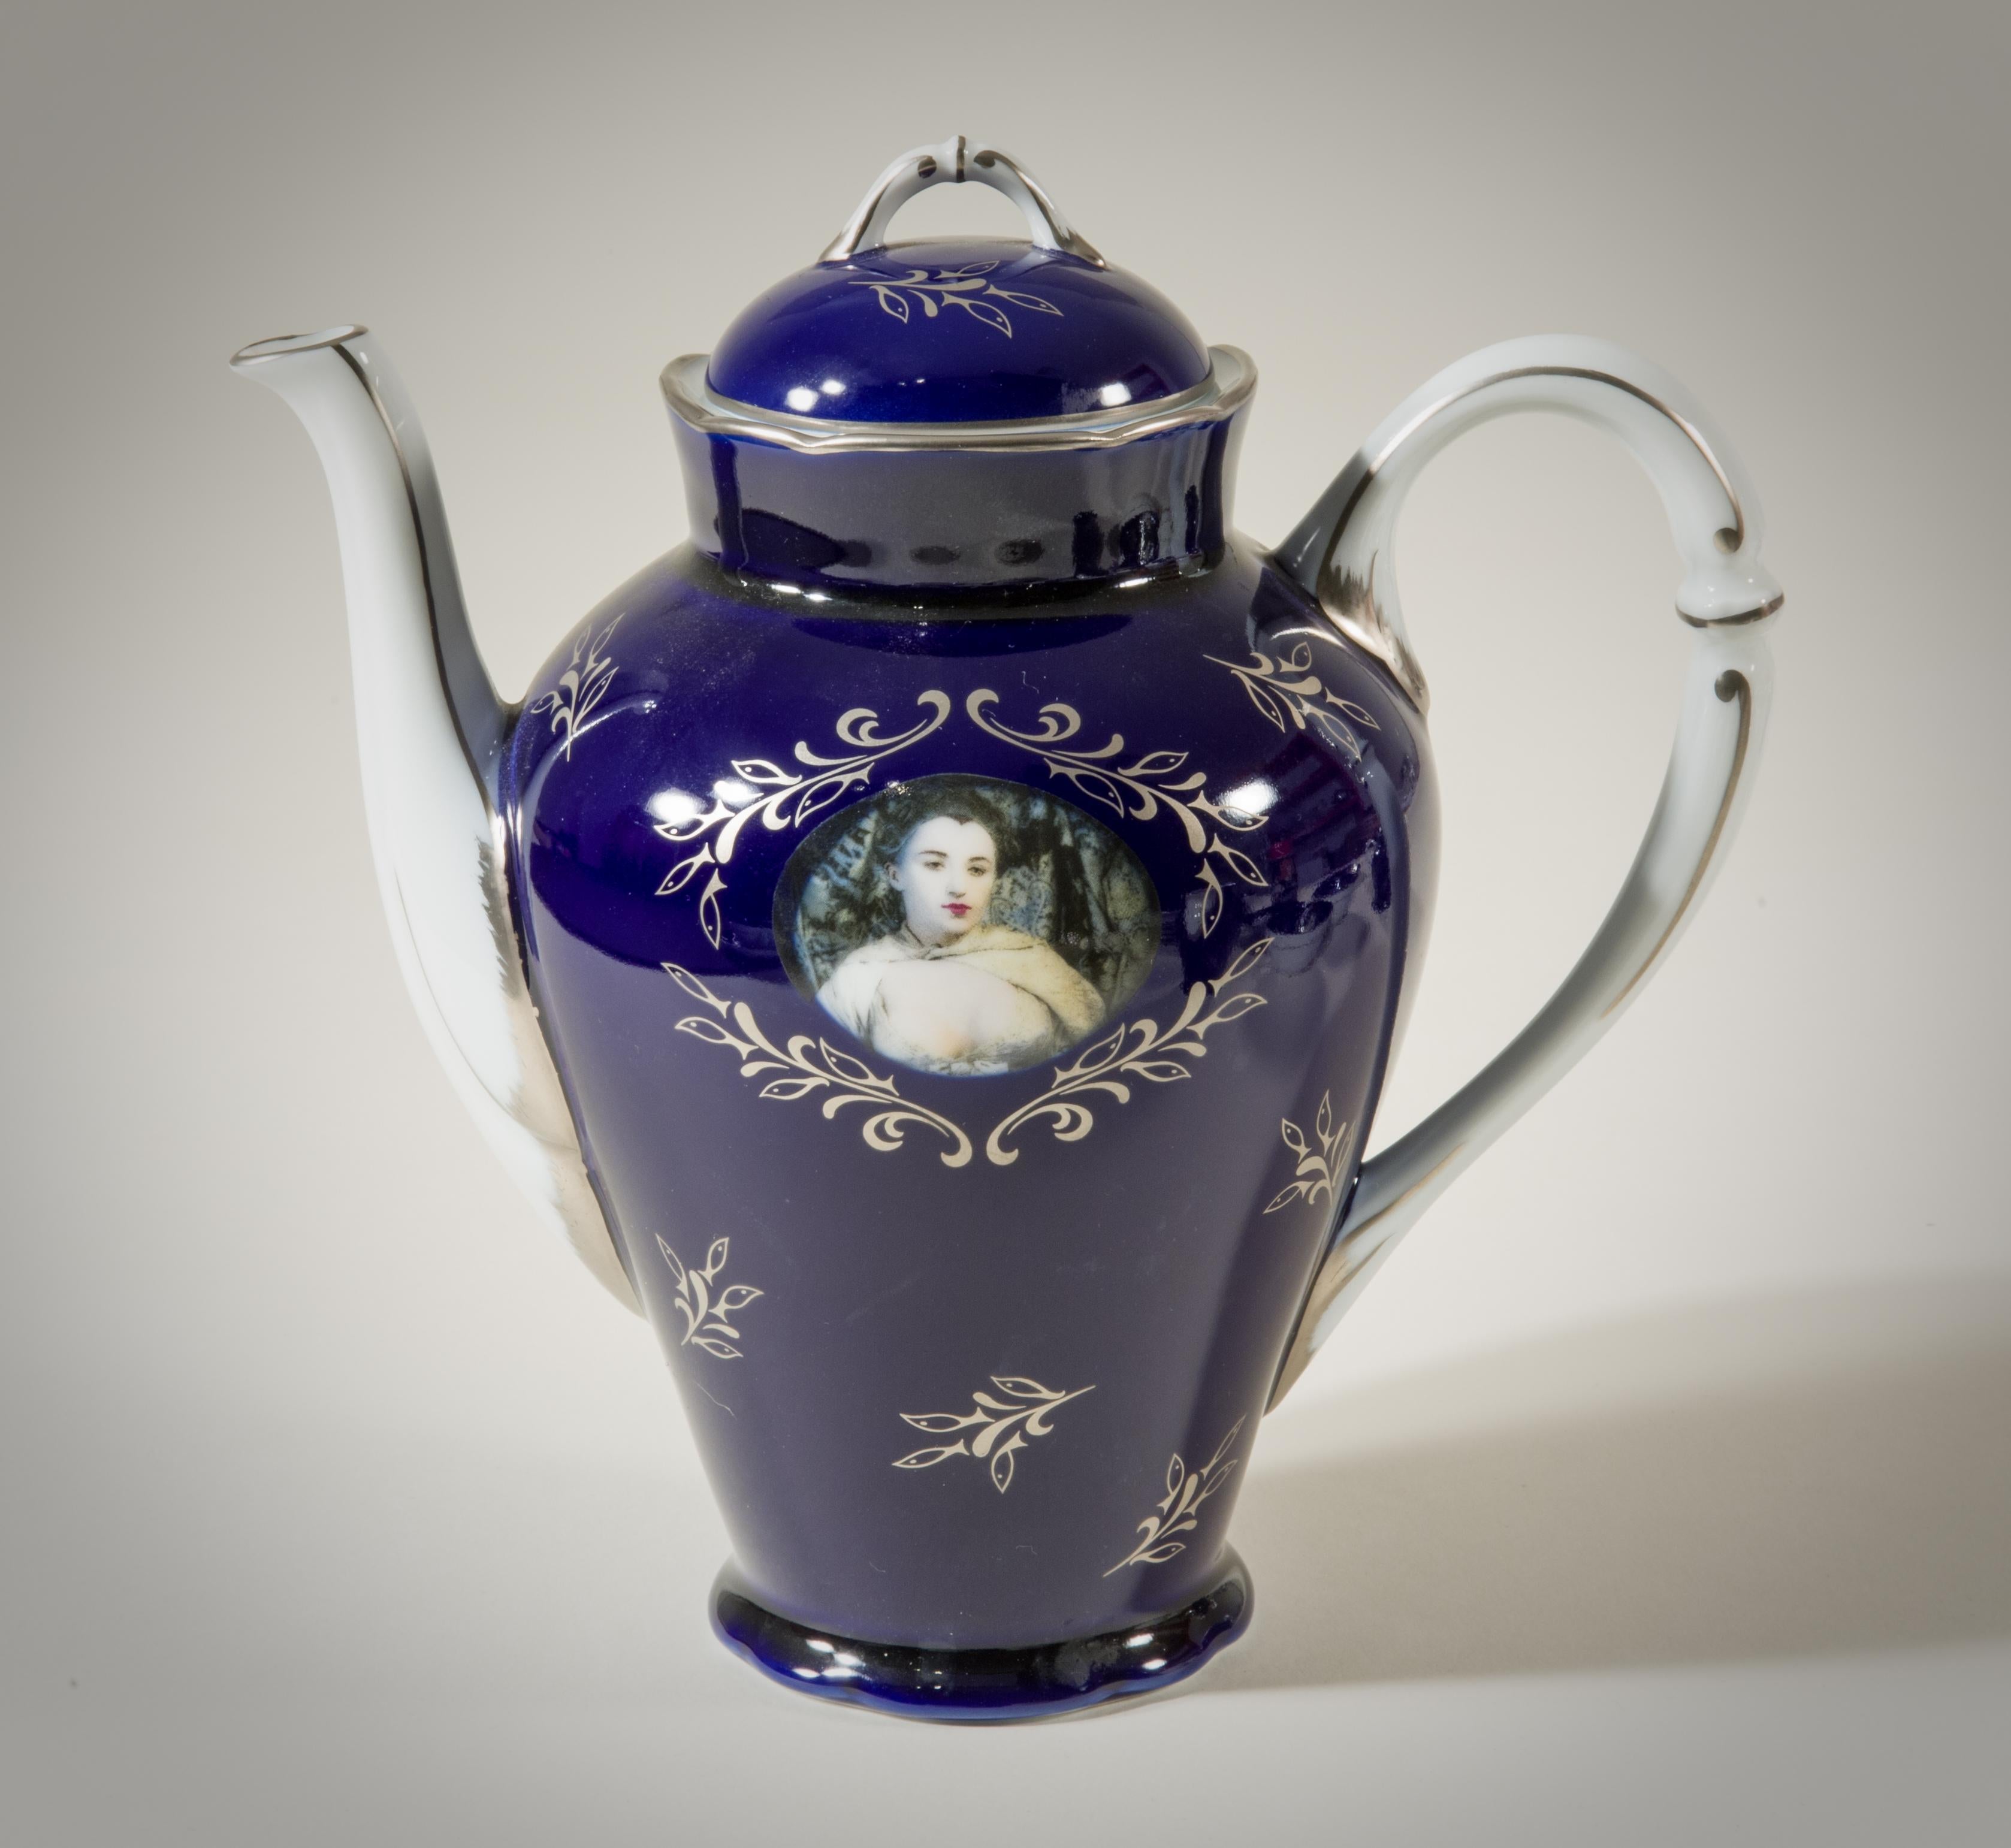 Madame de Pompadour (née Poisson) tea set - Rococo Mixed Media Art by Cindy Sherman